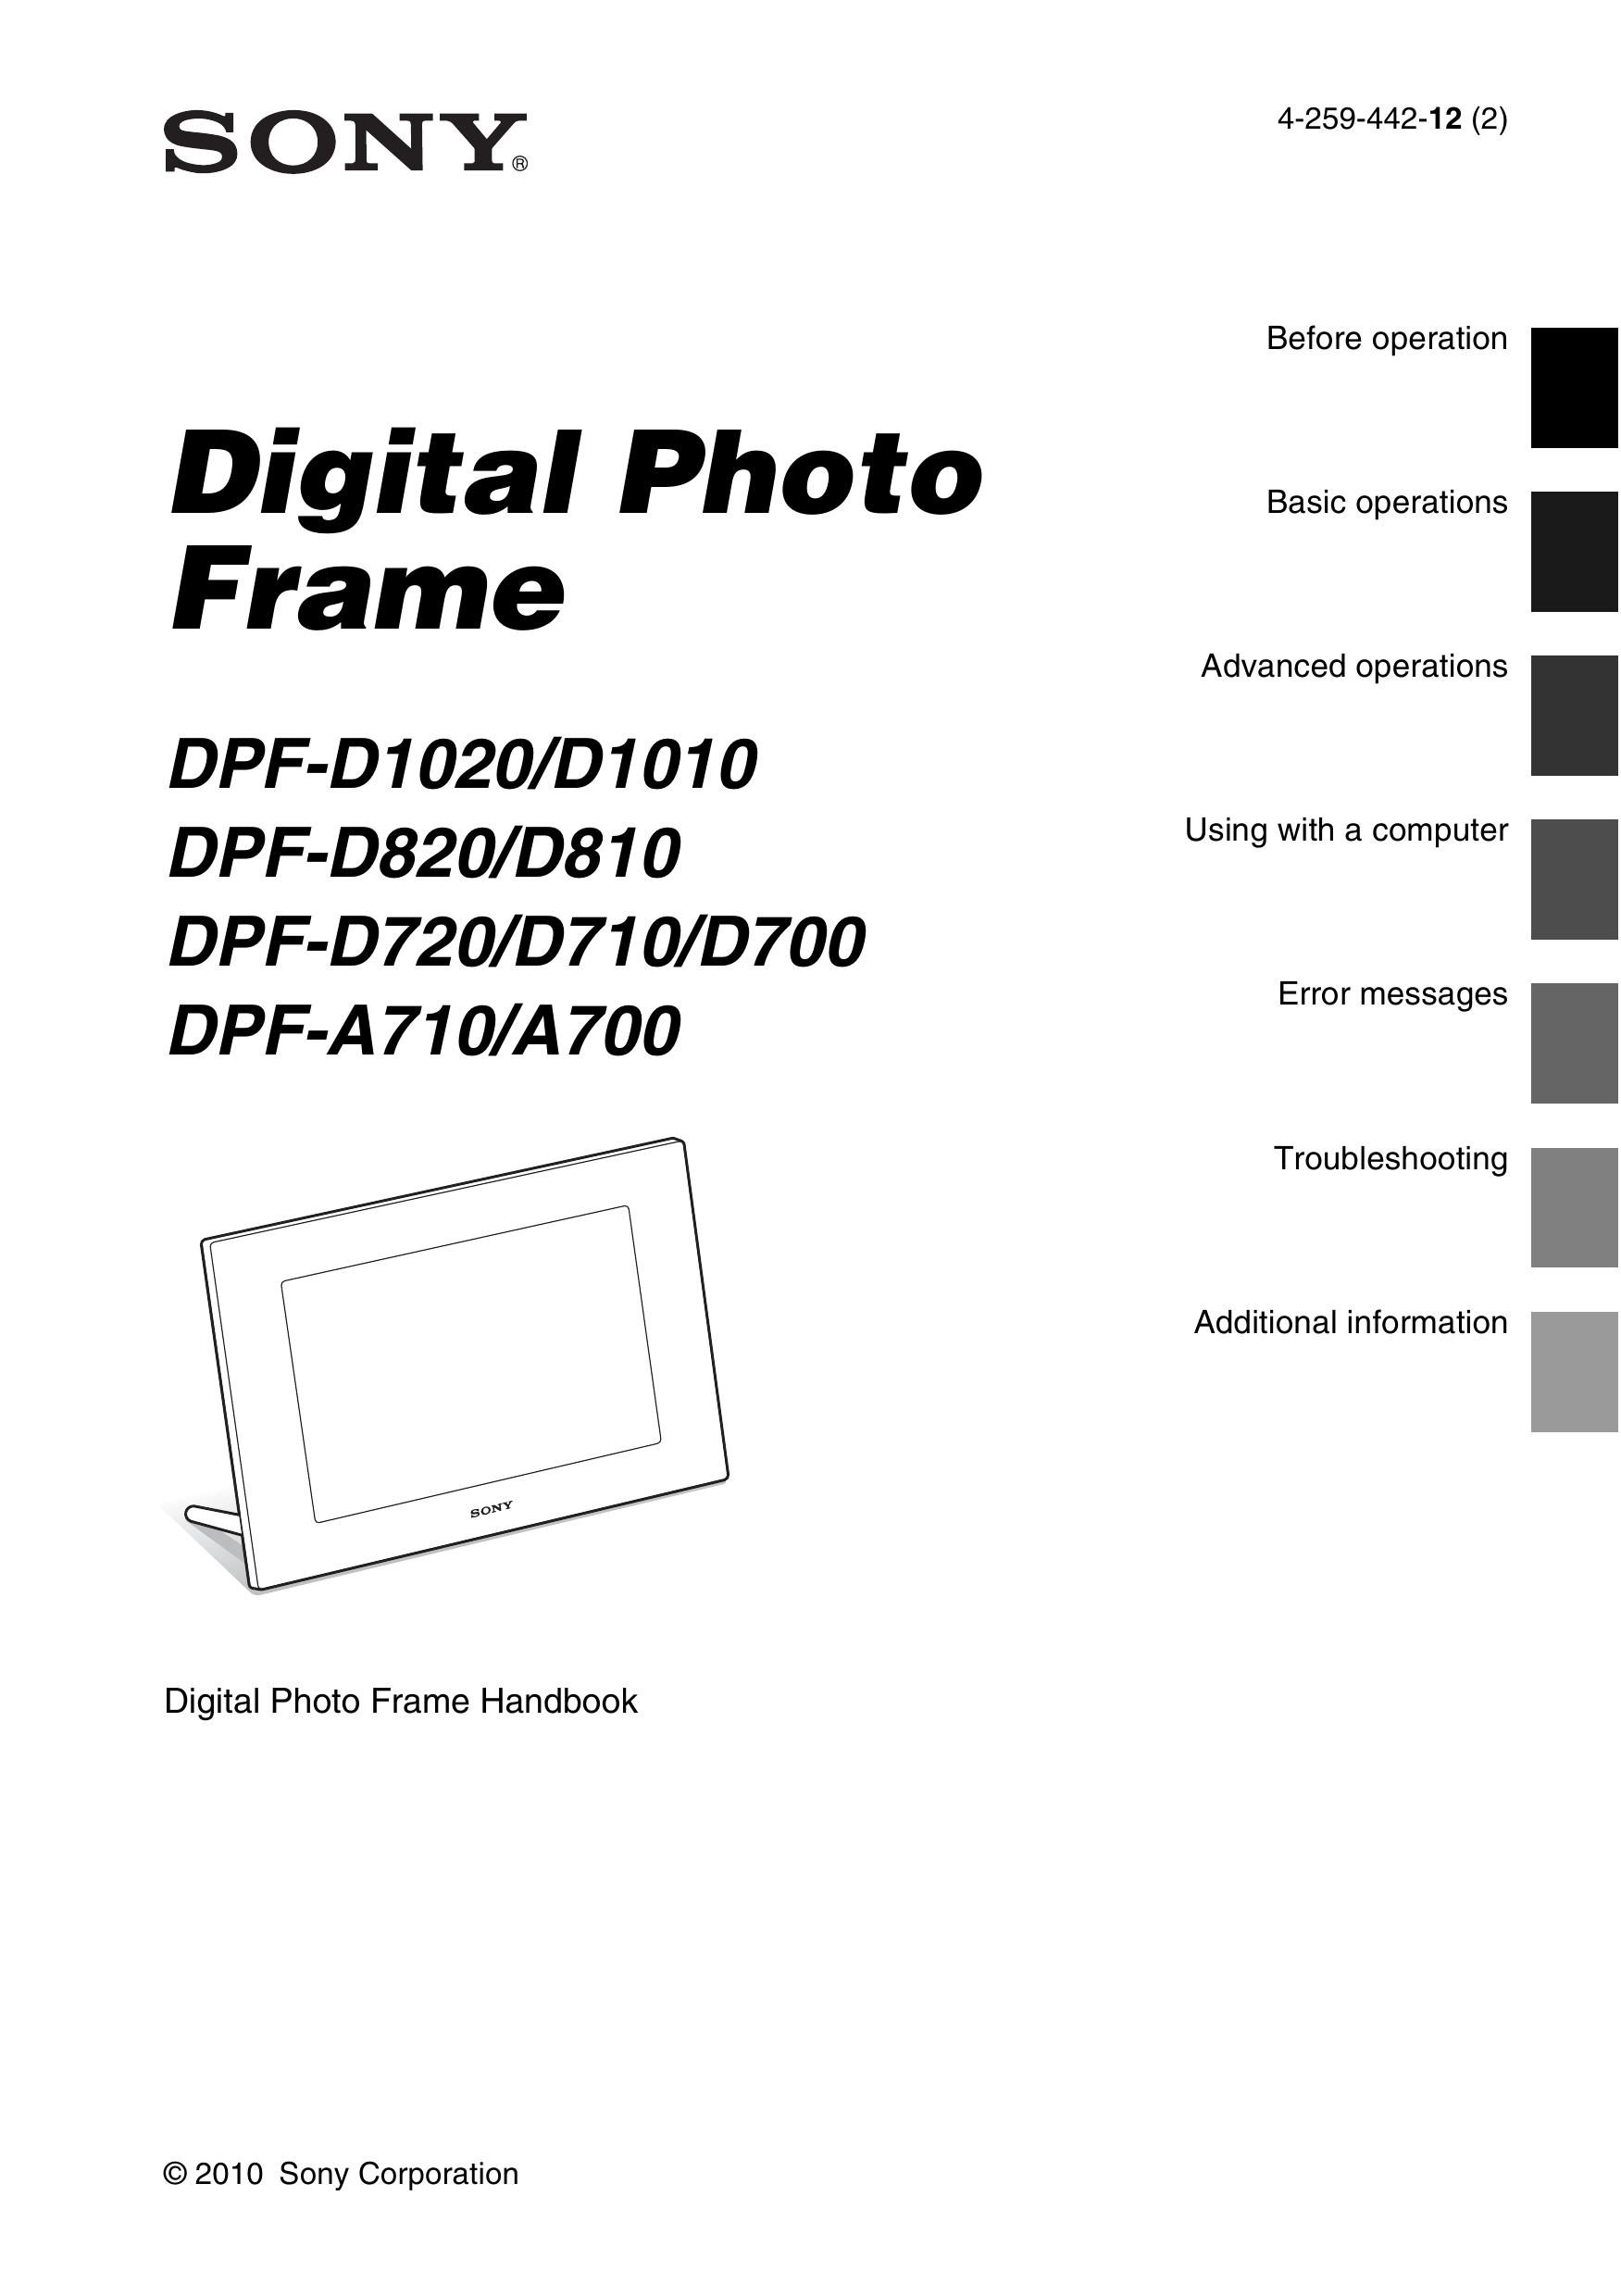 Sony DPF-D720/D710/D700 Digital Photo Frame User Manual